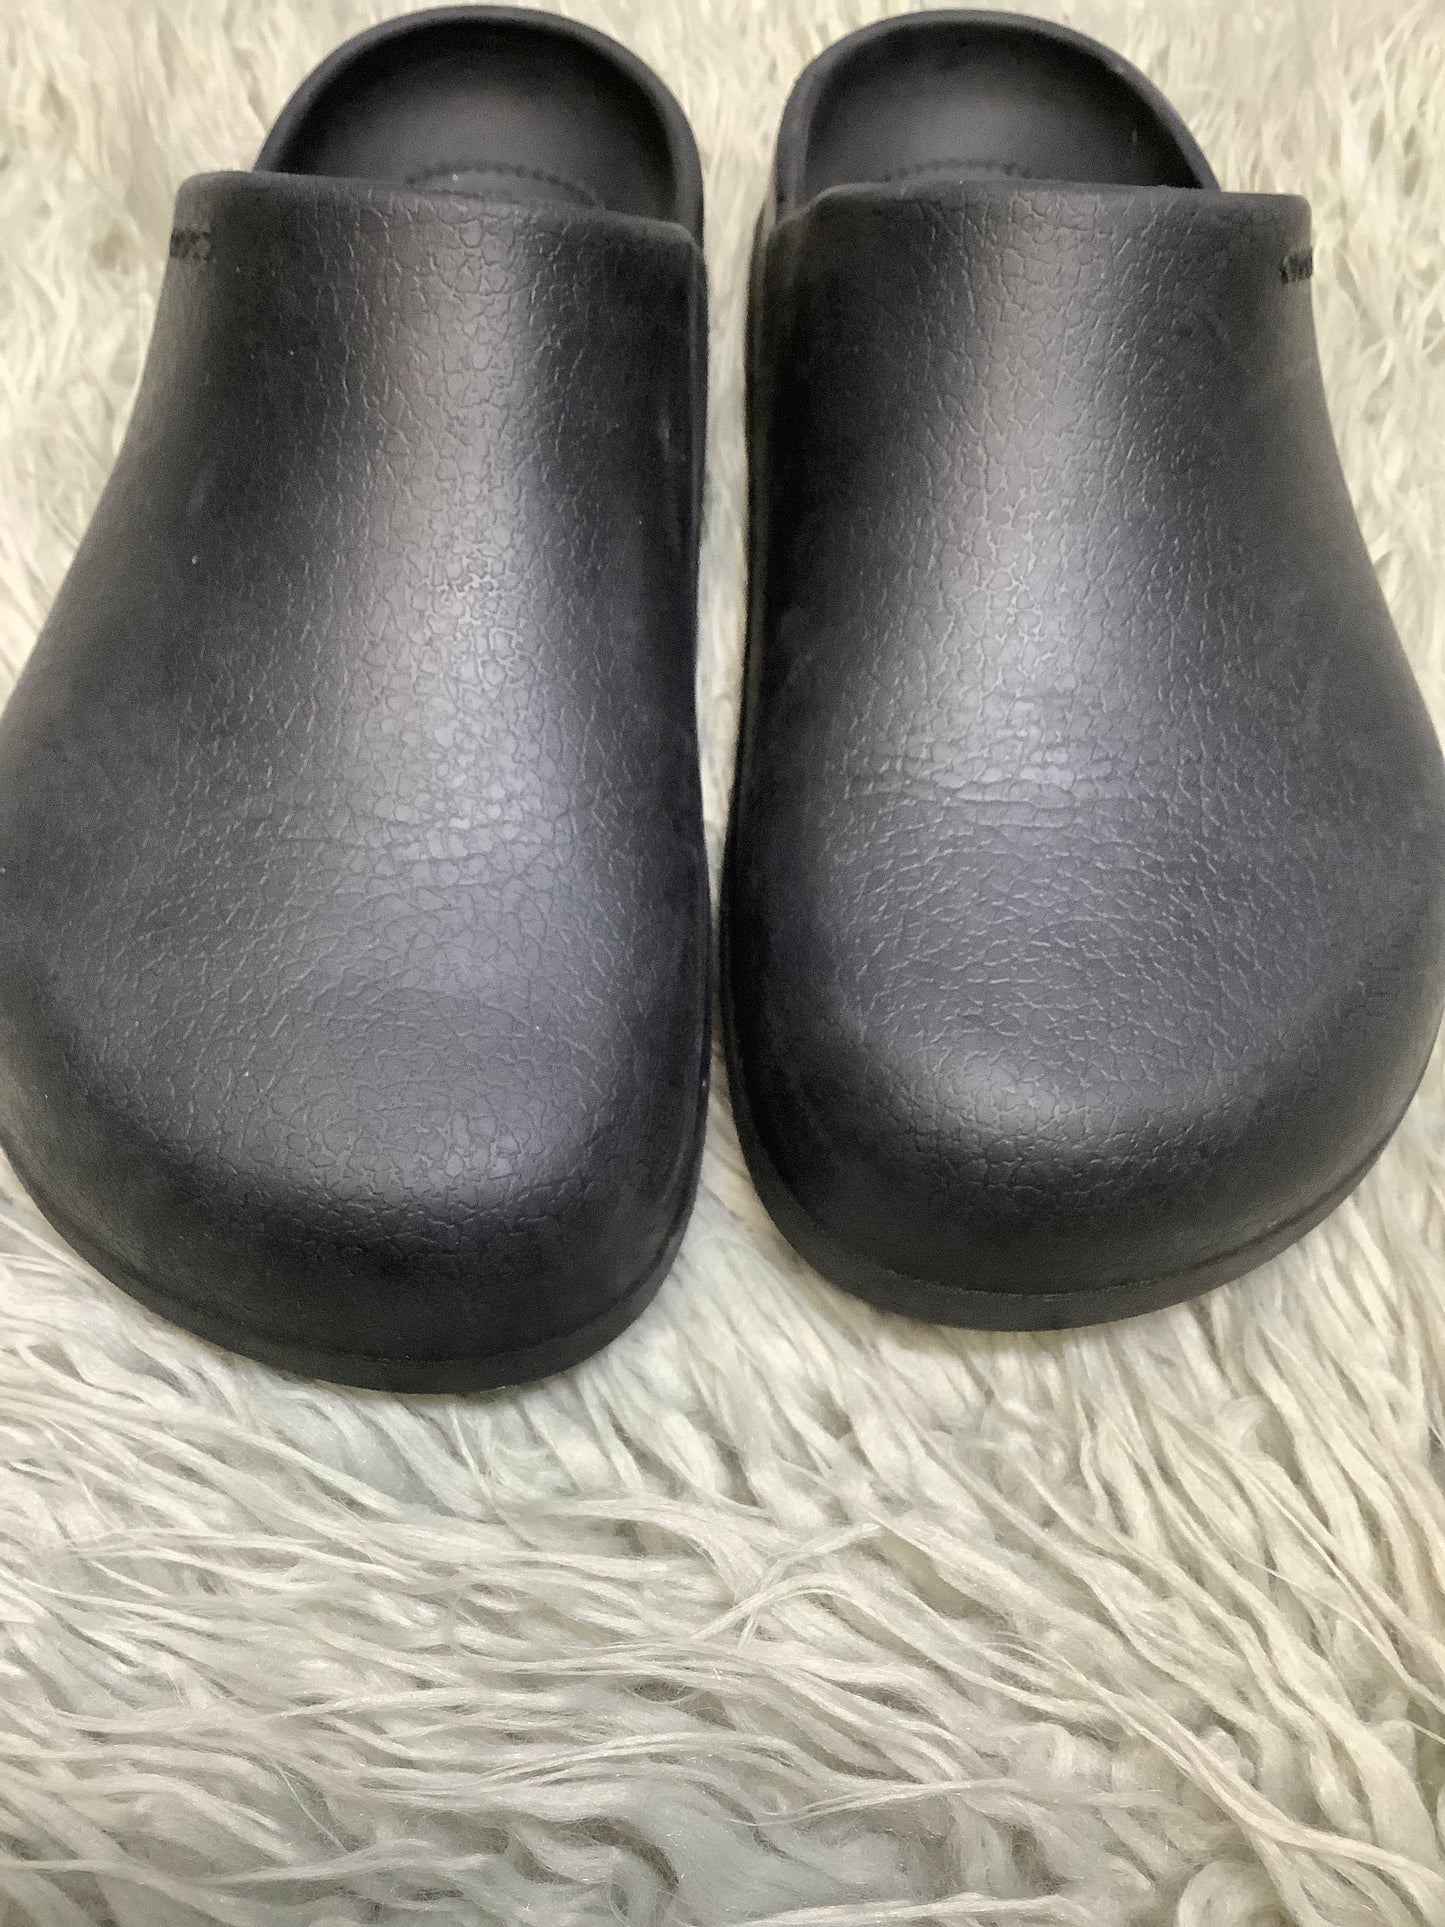 Black Shoes Flats Crocs, Size 8